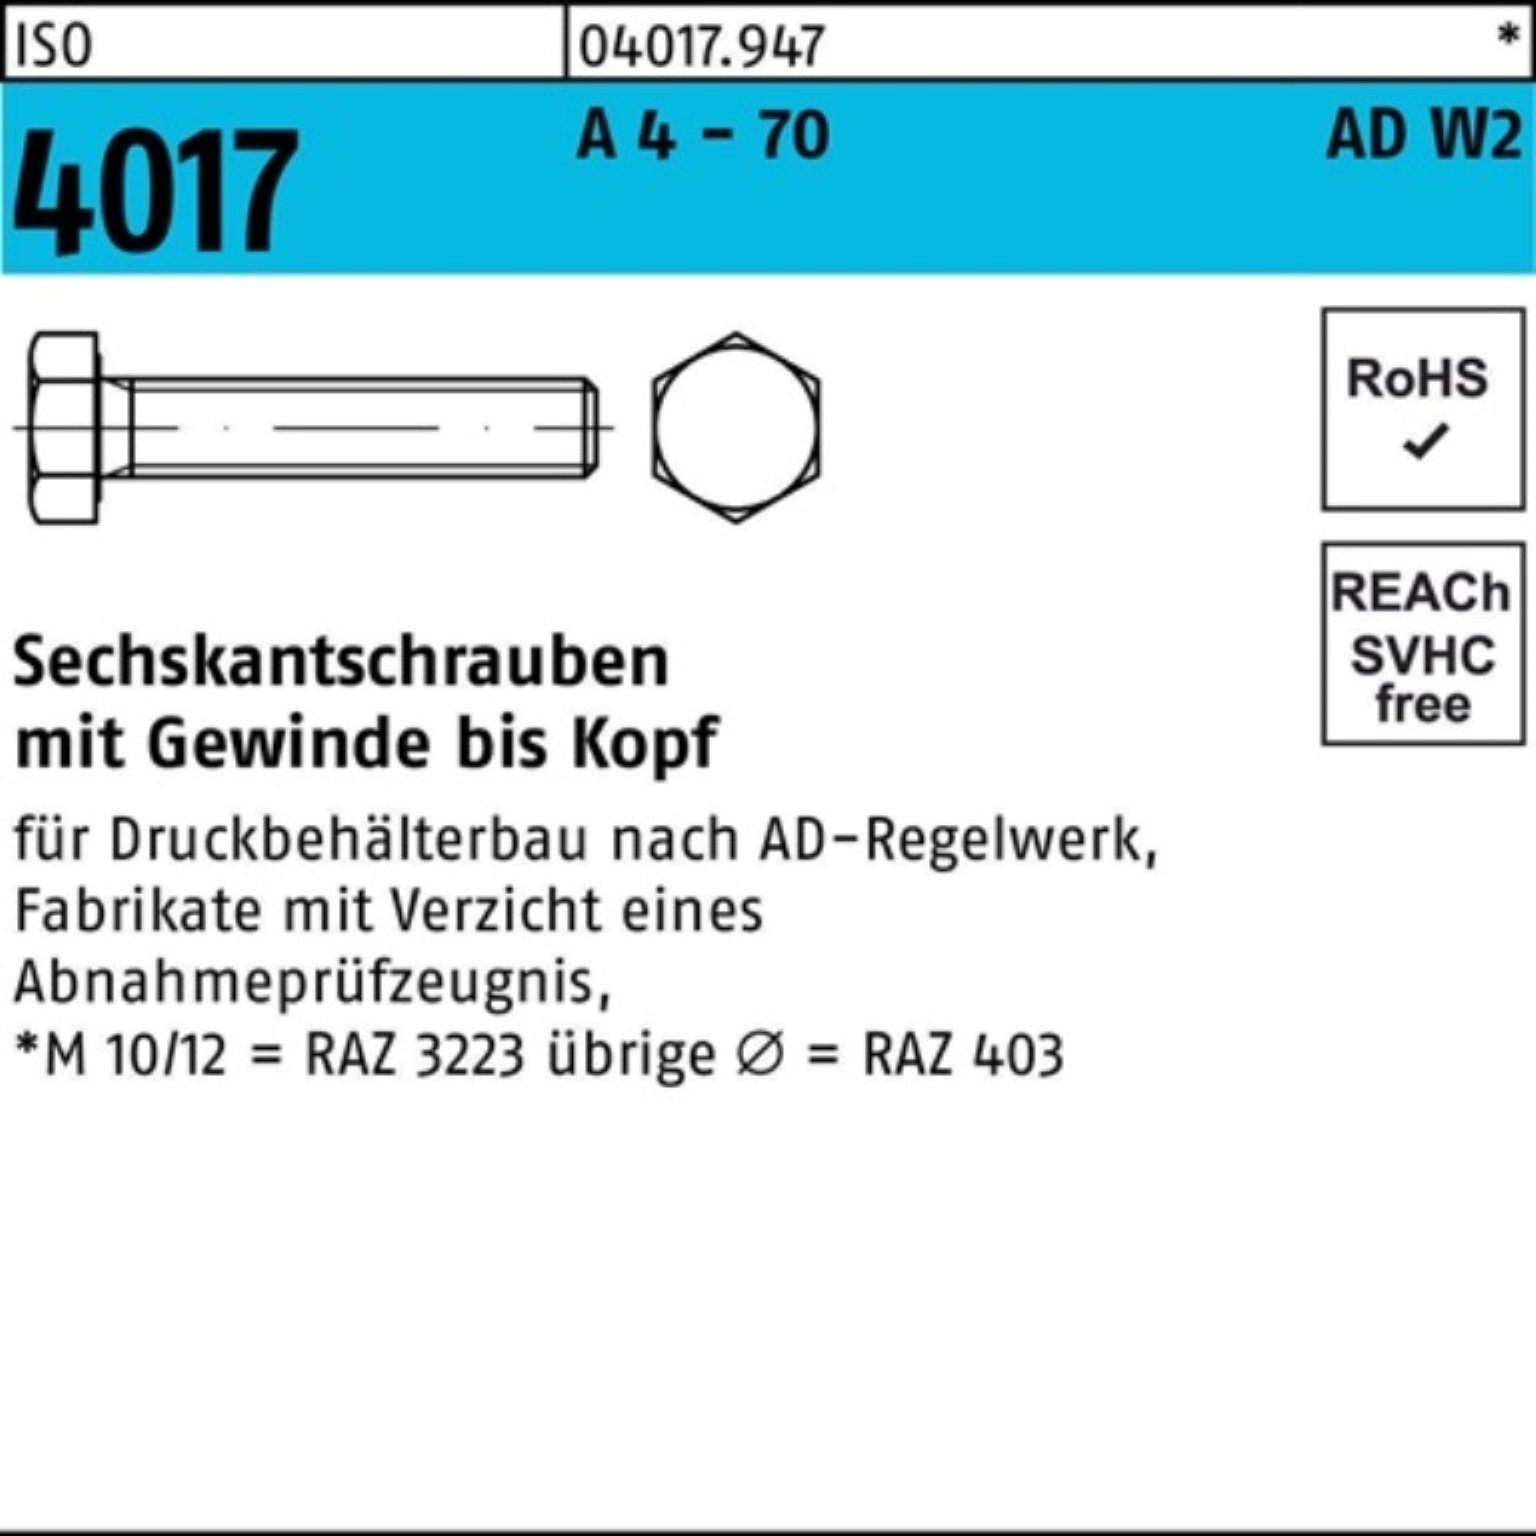 VG St 200er Sechskantschraube ISO Pack Bufab - 4 200 A Sechskantschraube AD-W2 70 M8x 4017 12